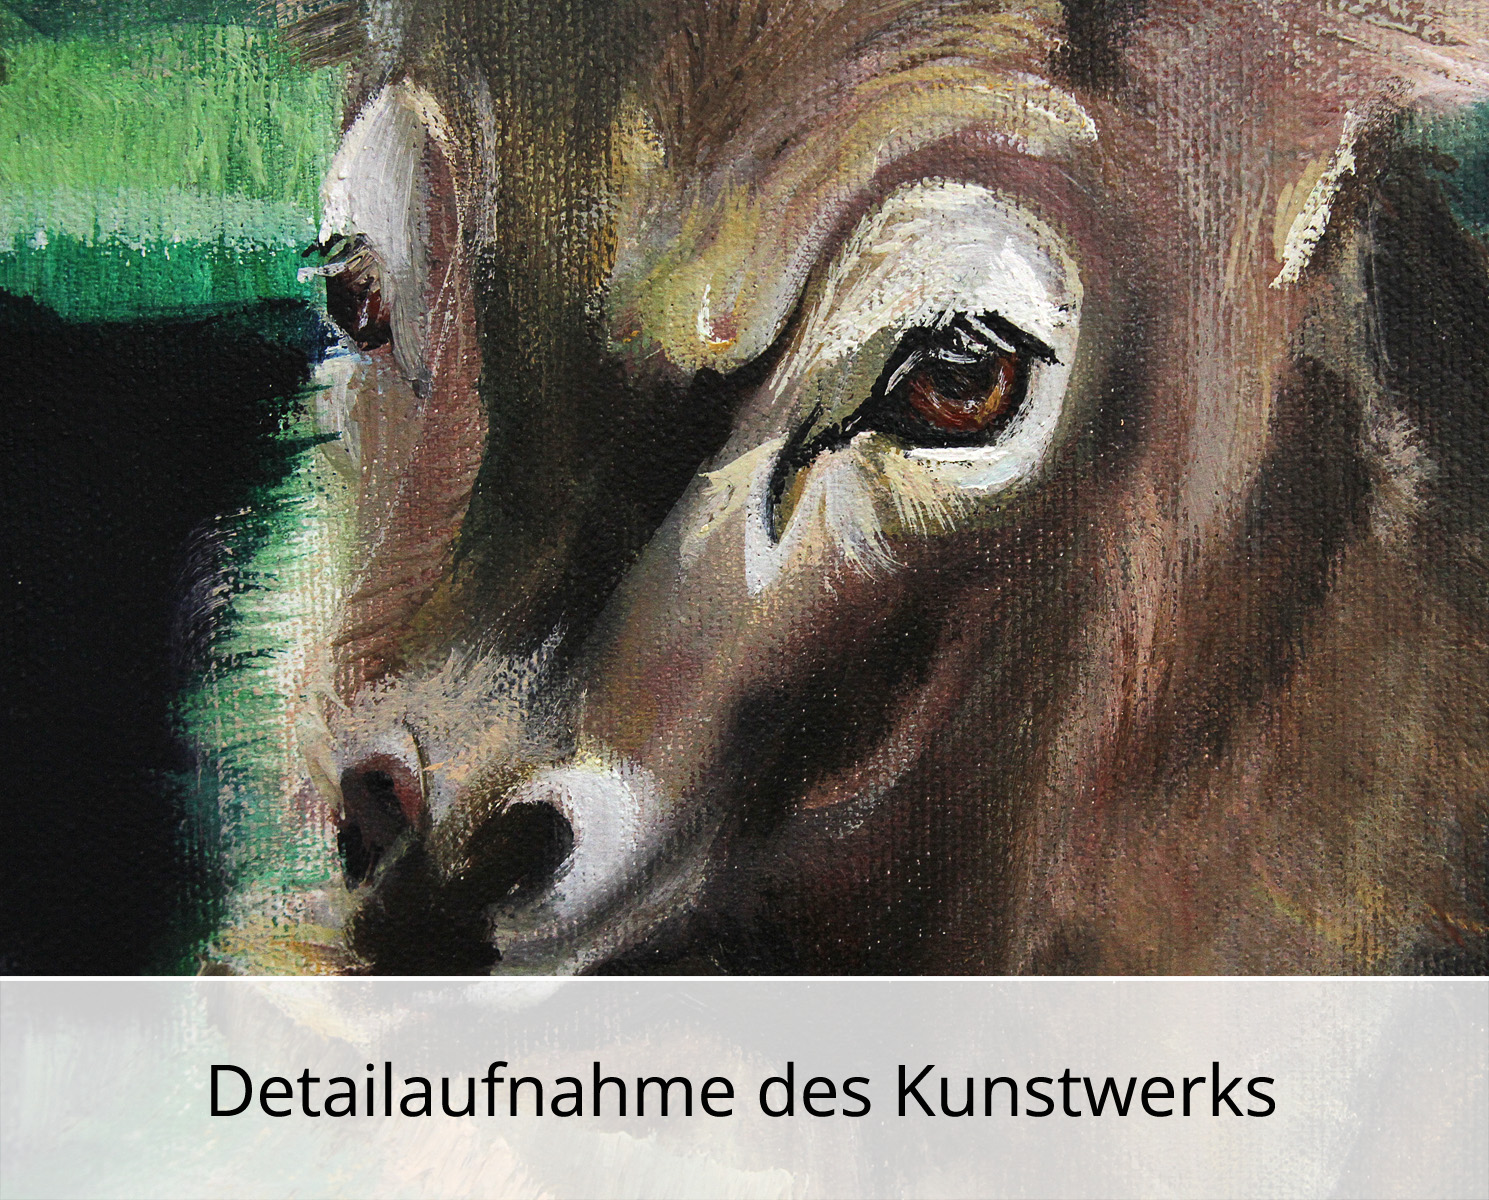 D. Block: "Der Junge aus dem Wald", Original/Unikat, expressive Ölmalerei